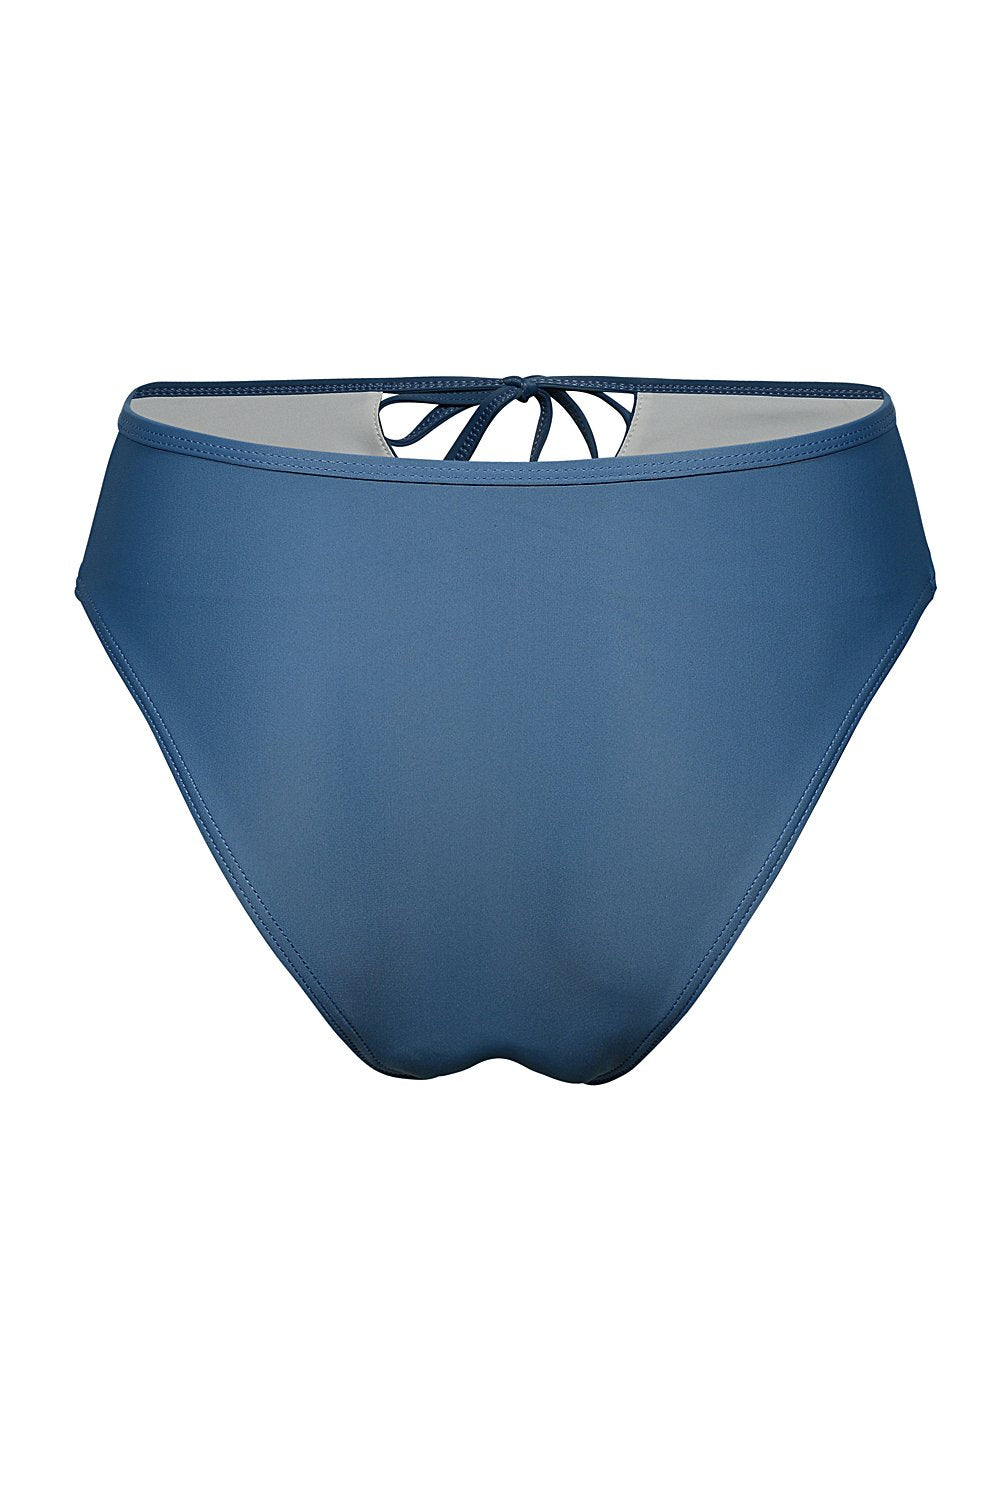 tie front bottom beach bikini in slate grey powder blue color back view